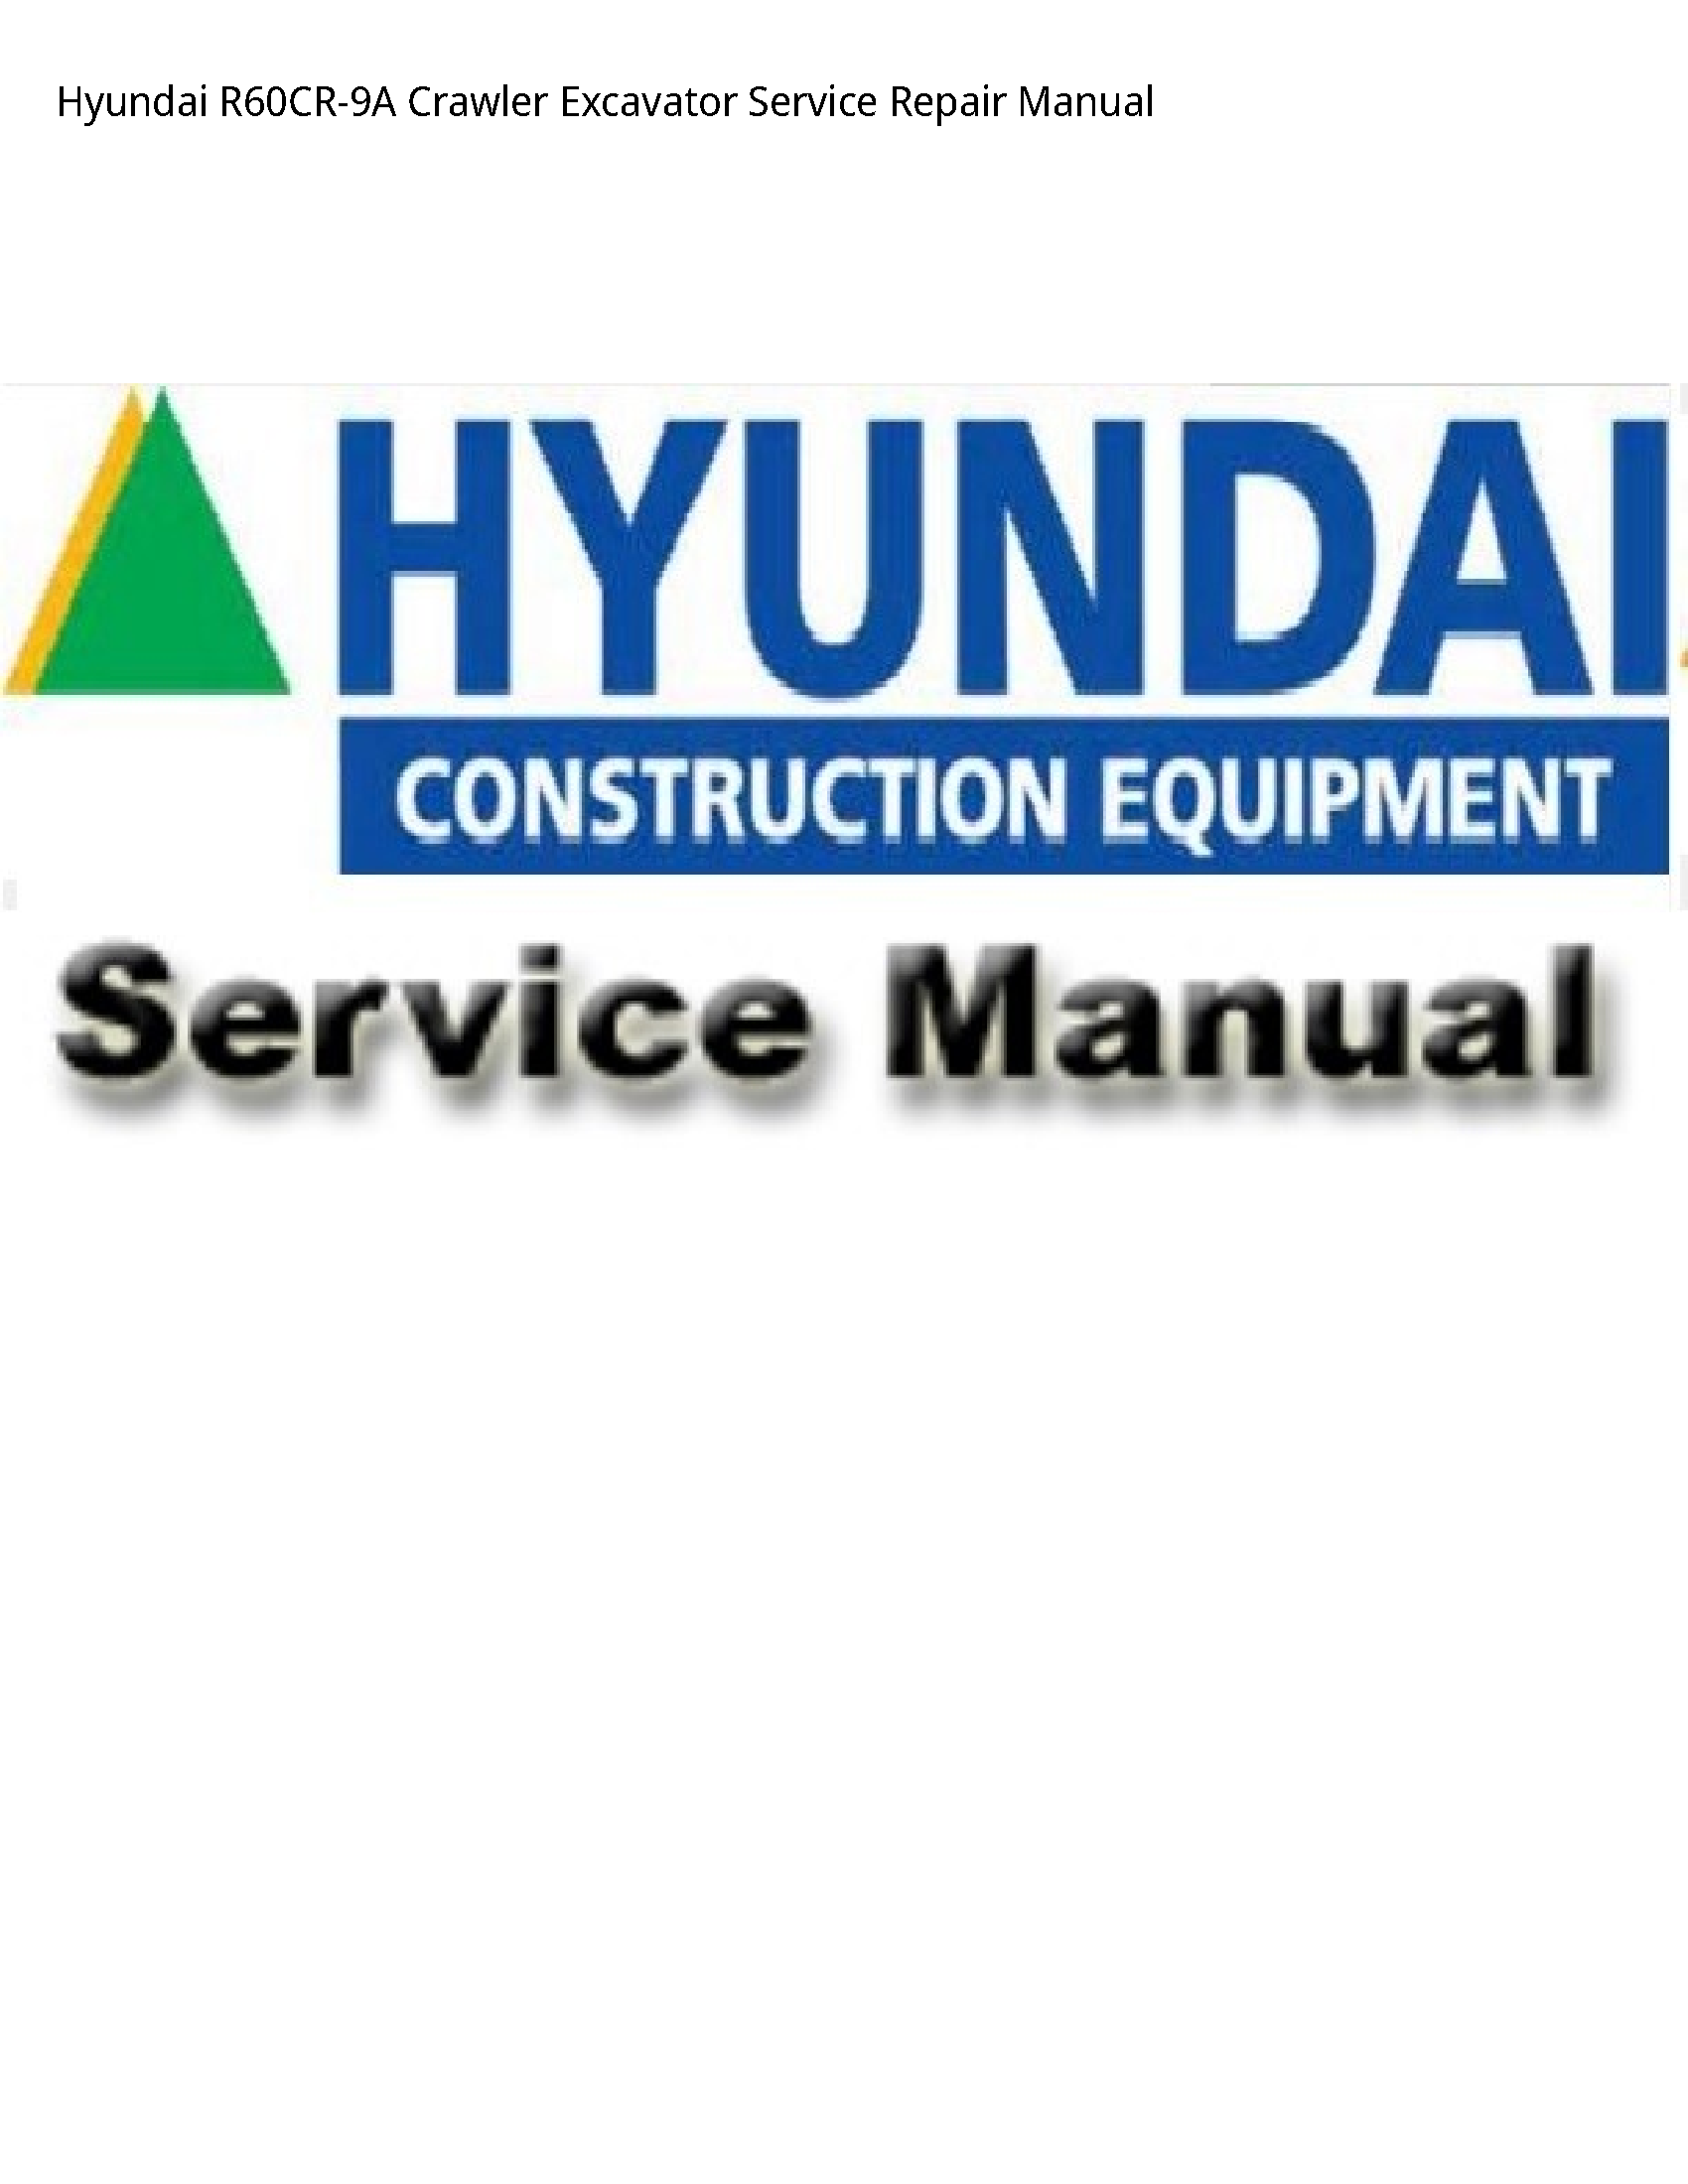 Hyundai R60CR-9A Crawler Excavator manual